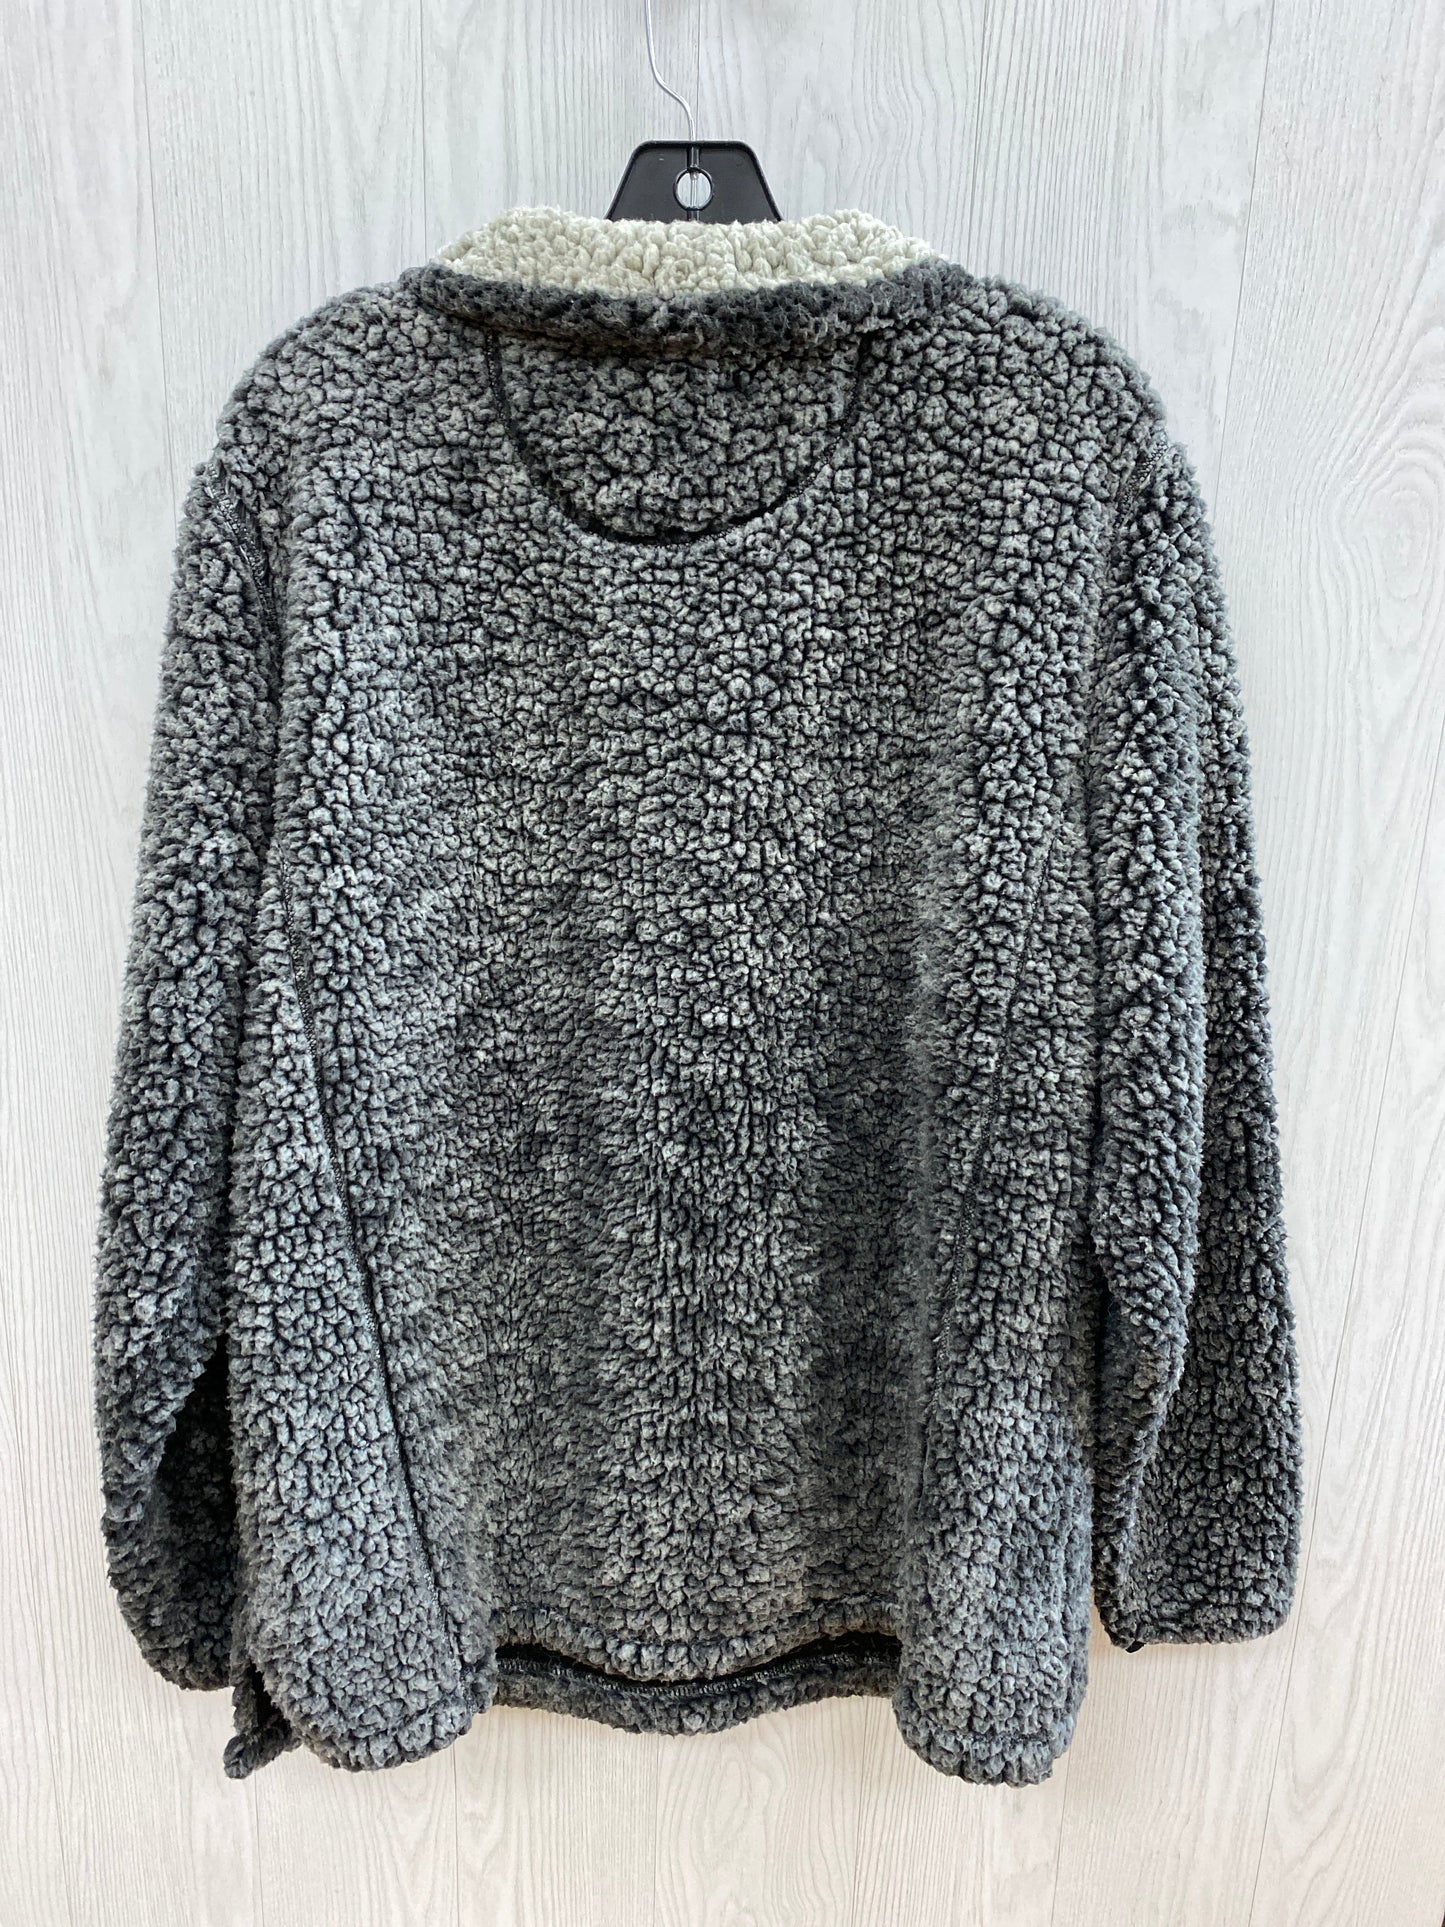 Top Long Sleeve Fleece Pullover By Clothes Mentor  Size: Xl